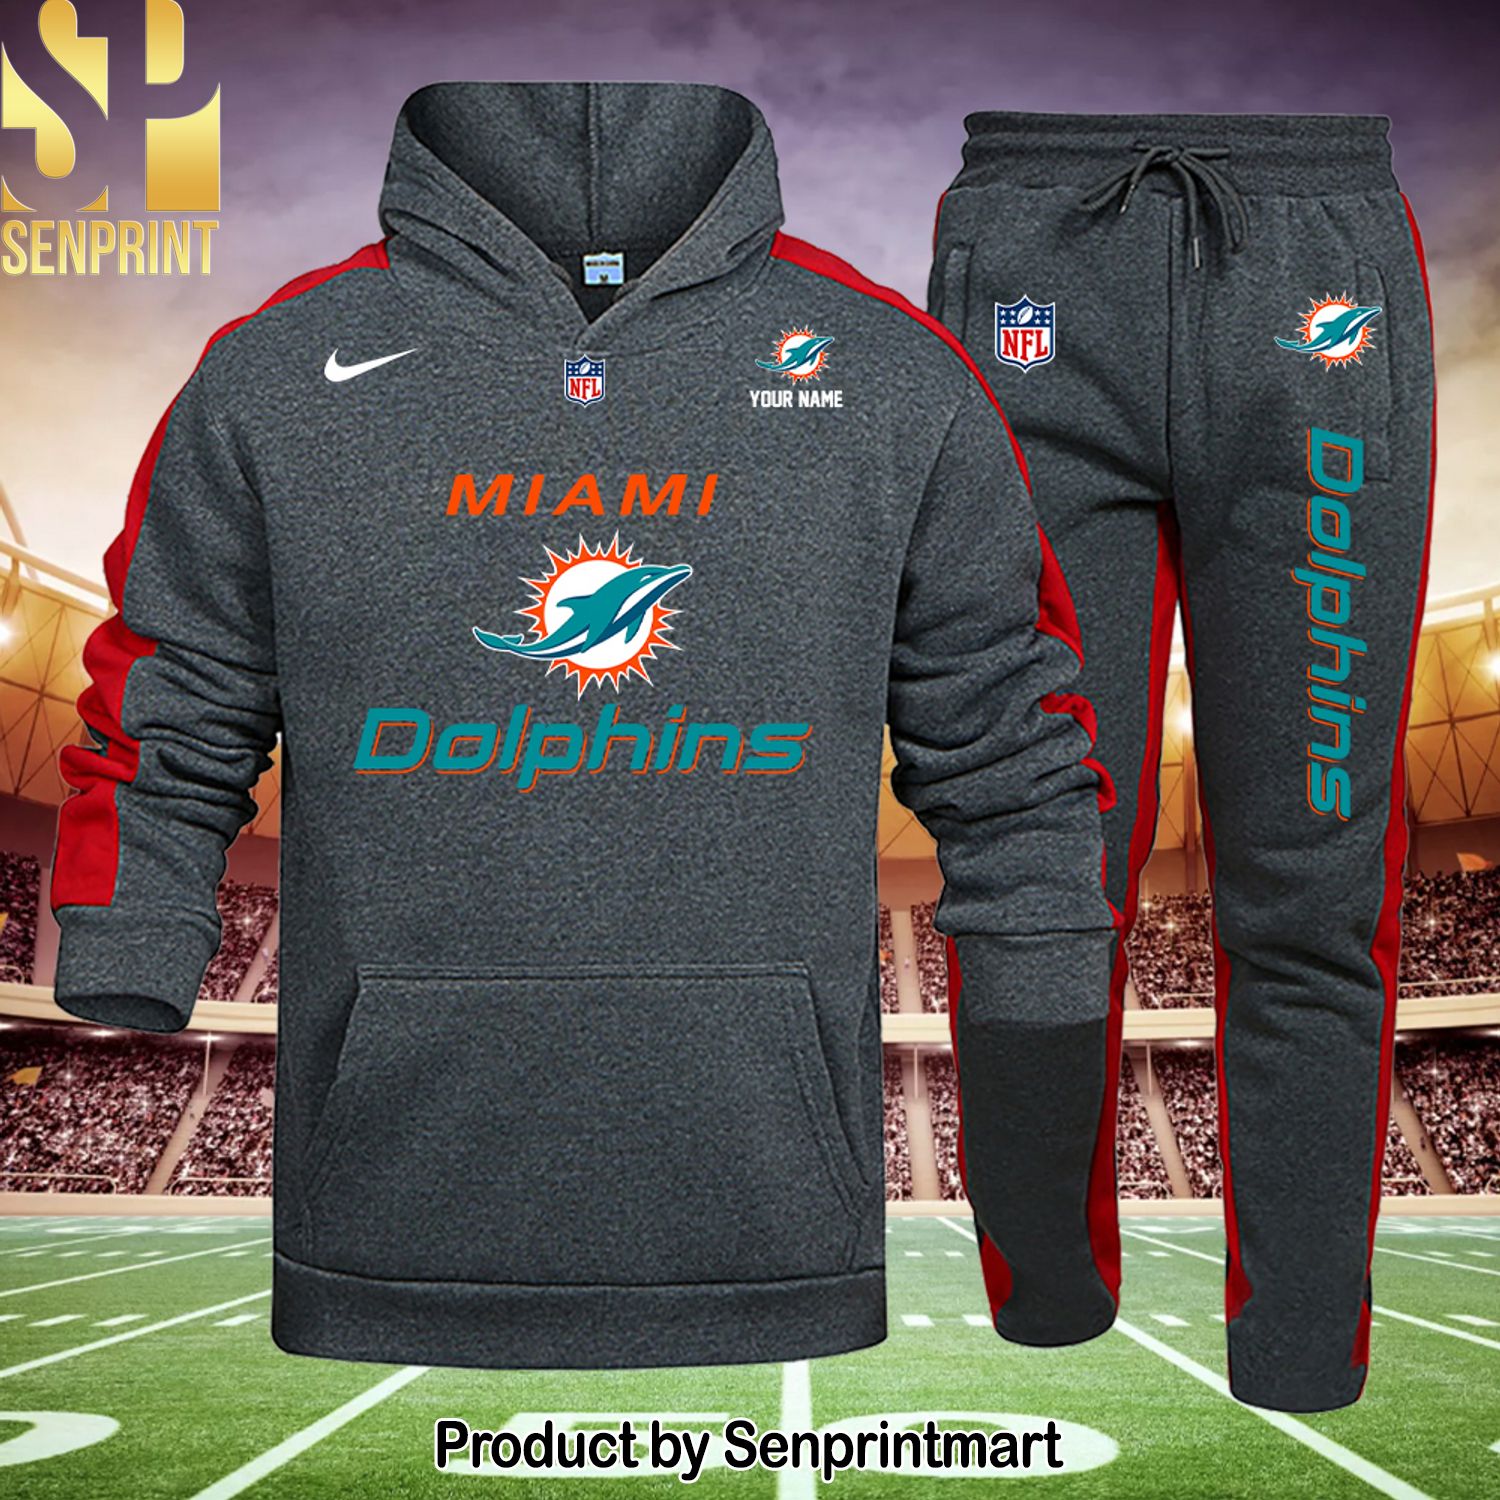 Miami Dolphins Full Printing Shirt and Pants